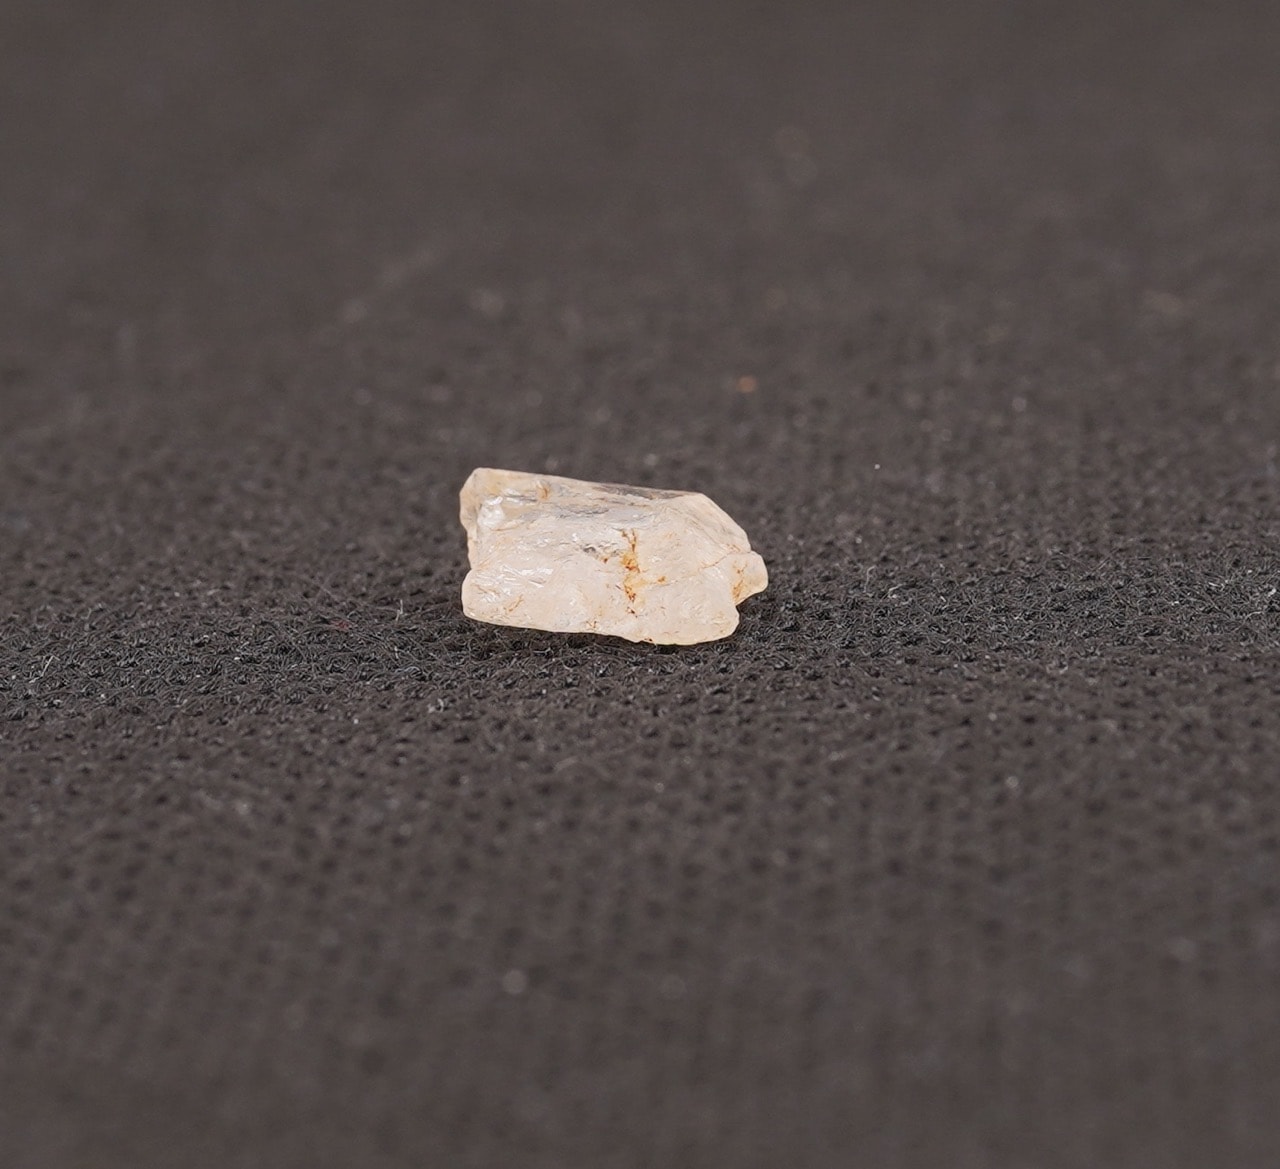 Fenacit nigerian cristal natural unicat f316